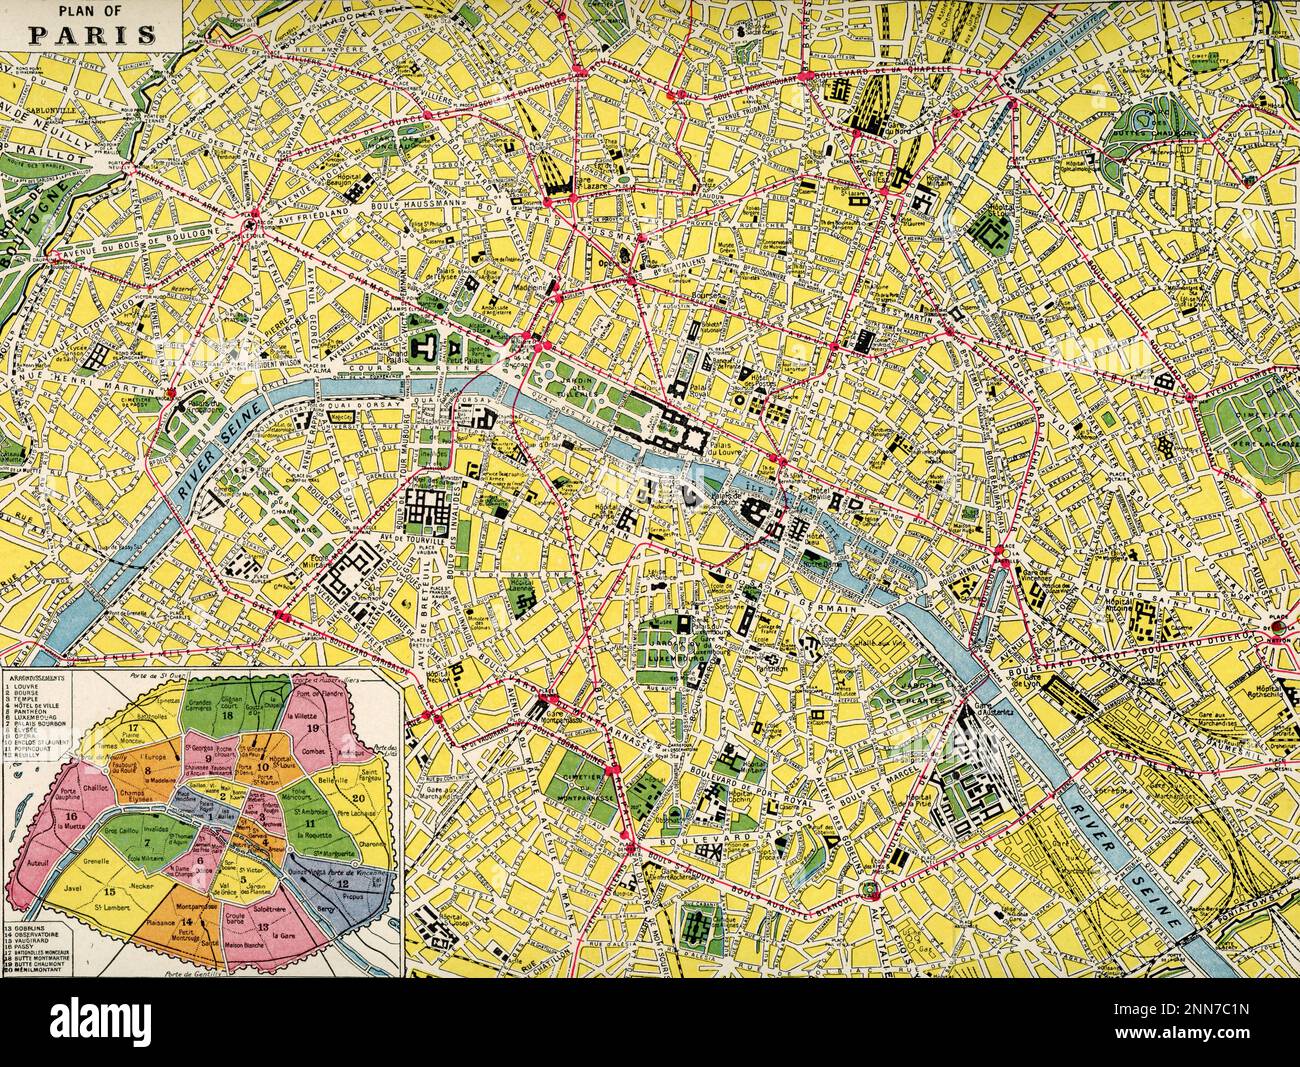 Plan of Paris, c1922. A 1920s plan of Paris highlighting its twenty arrondissements. Stock Photo